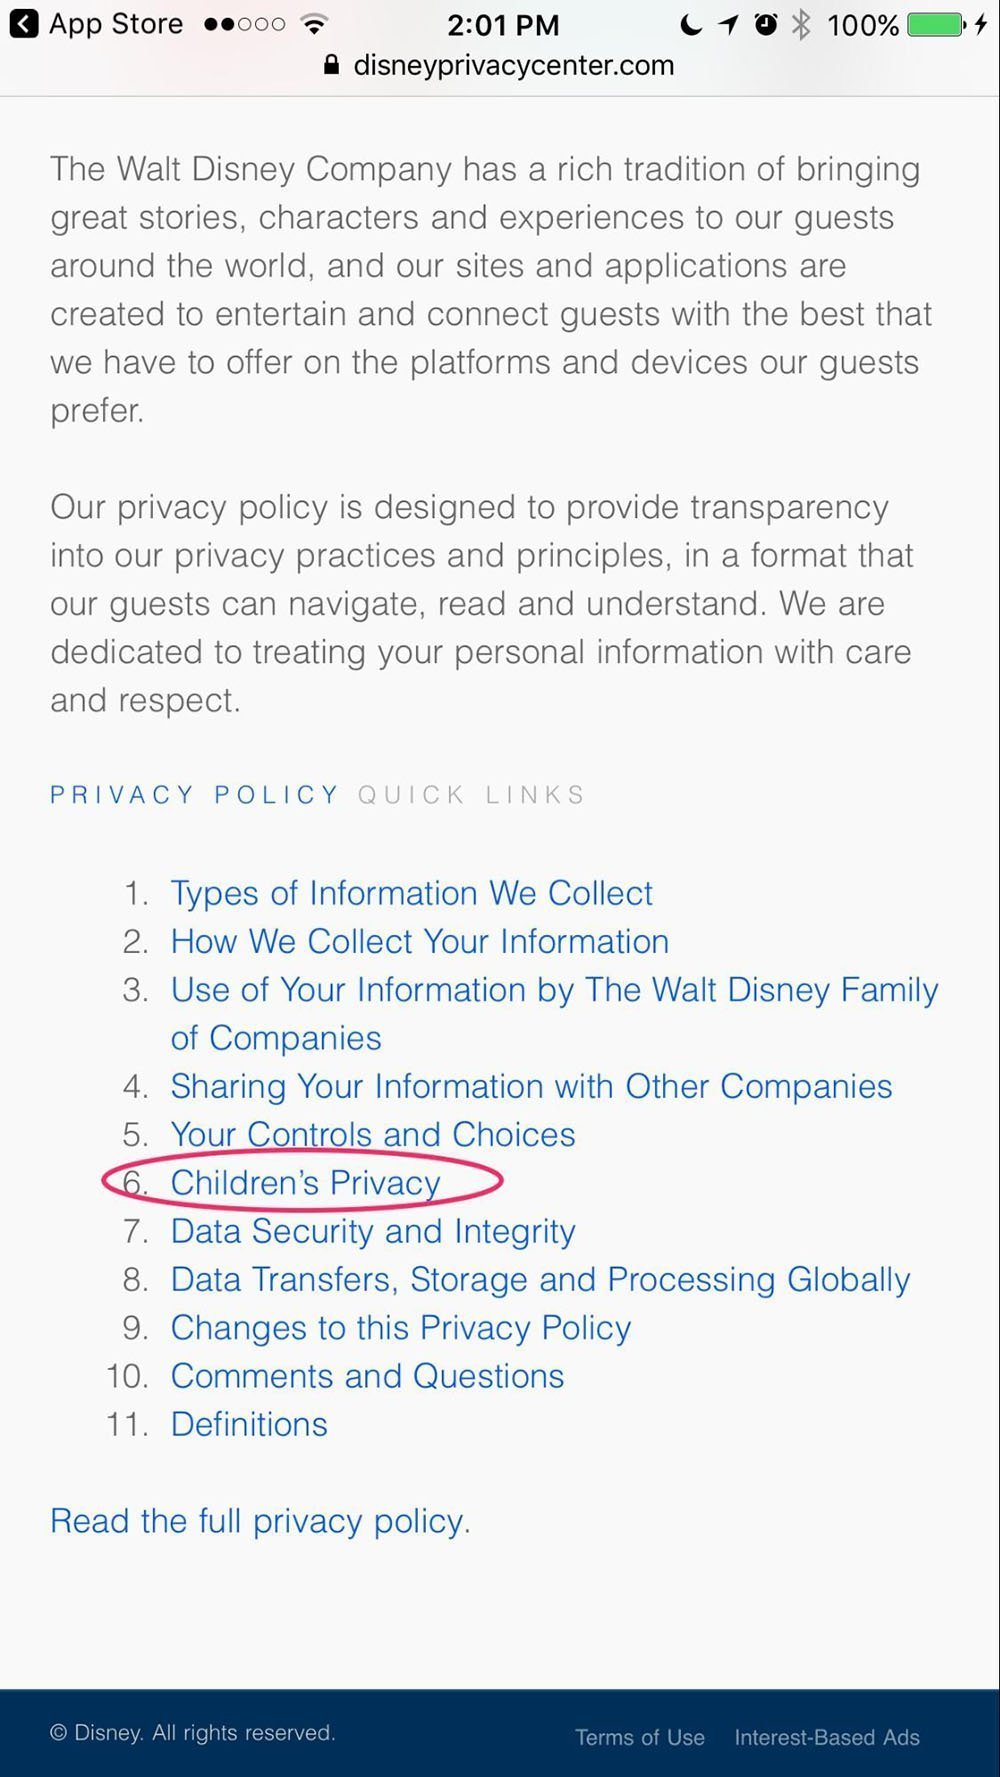 Walt Disney Privacy Center Mobile Website: Children Privacy item